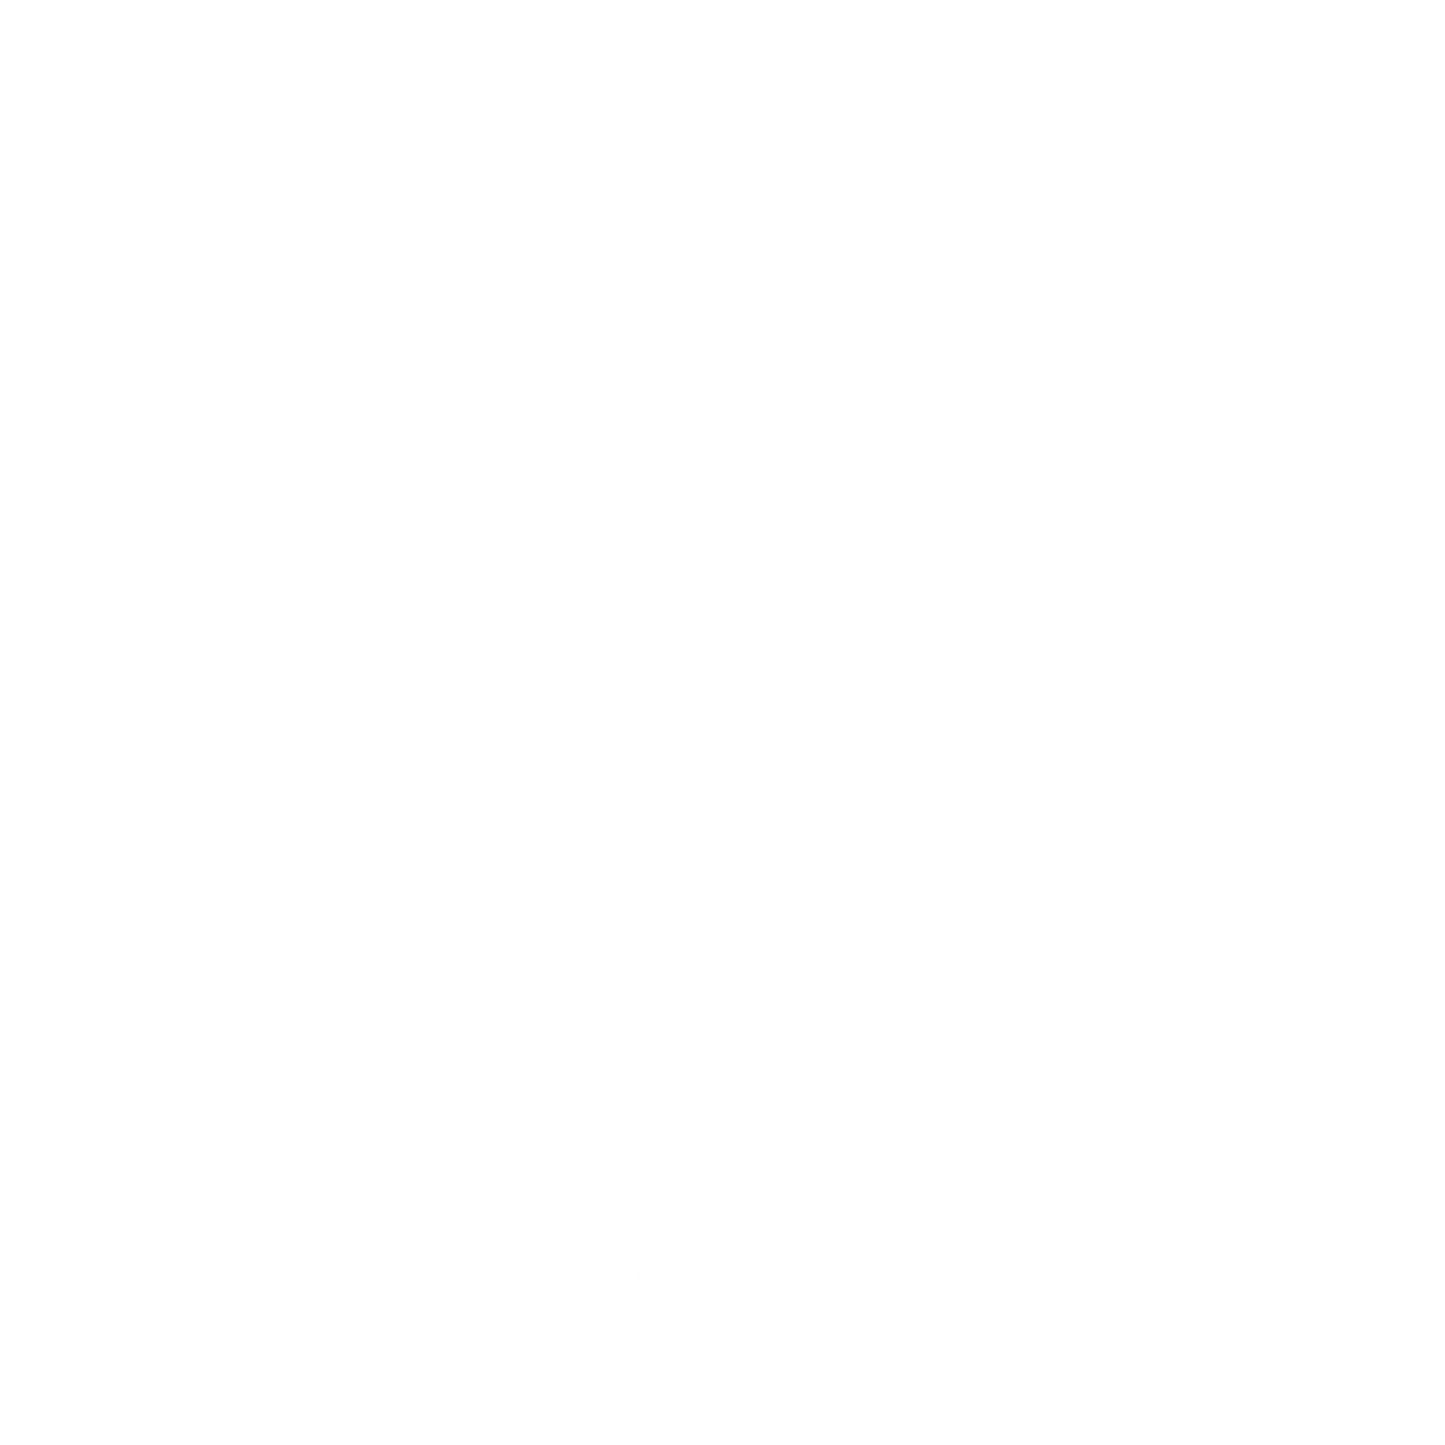 Me You where the fun begins